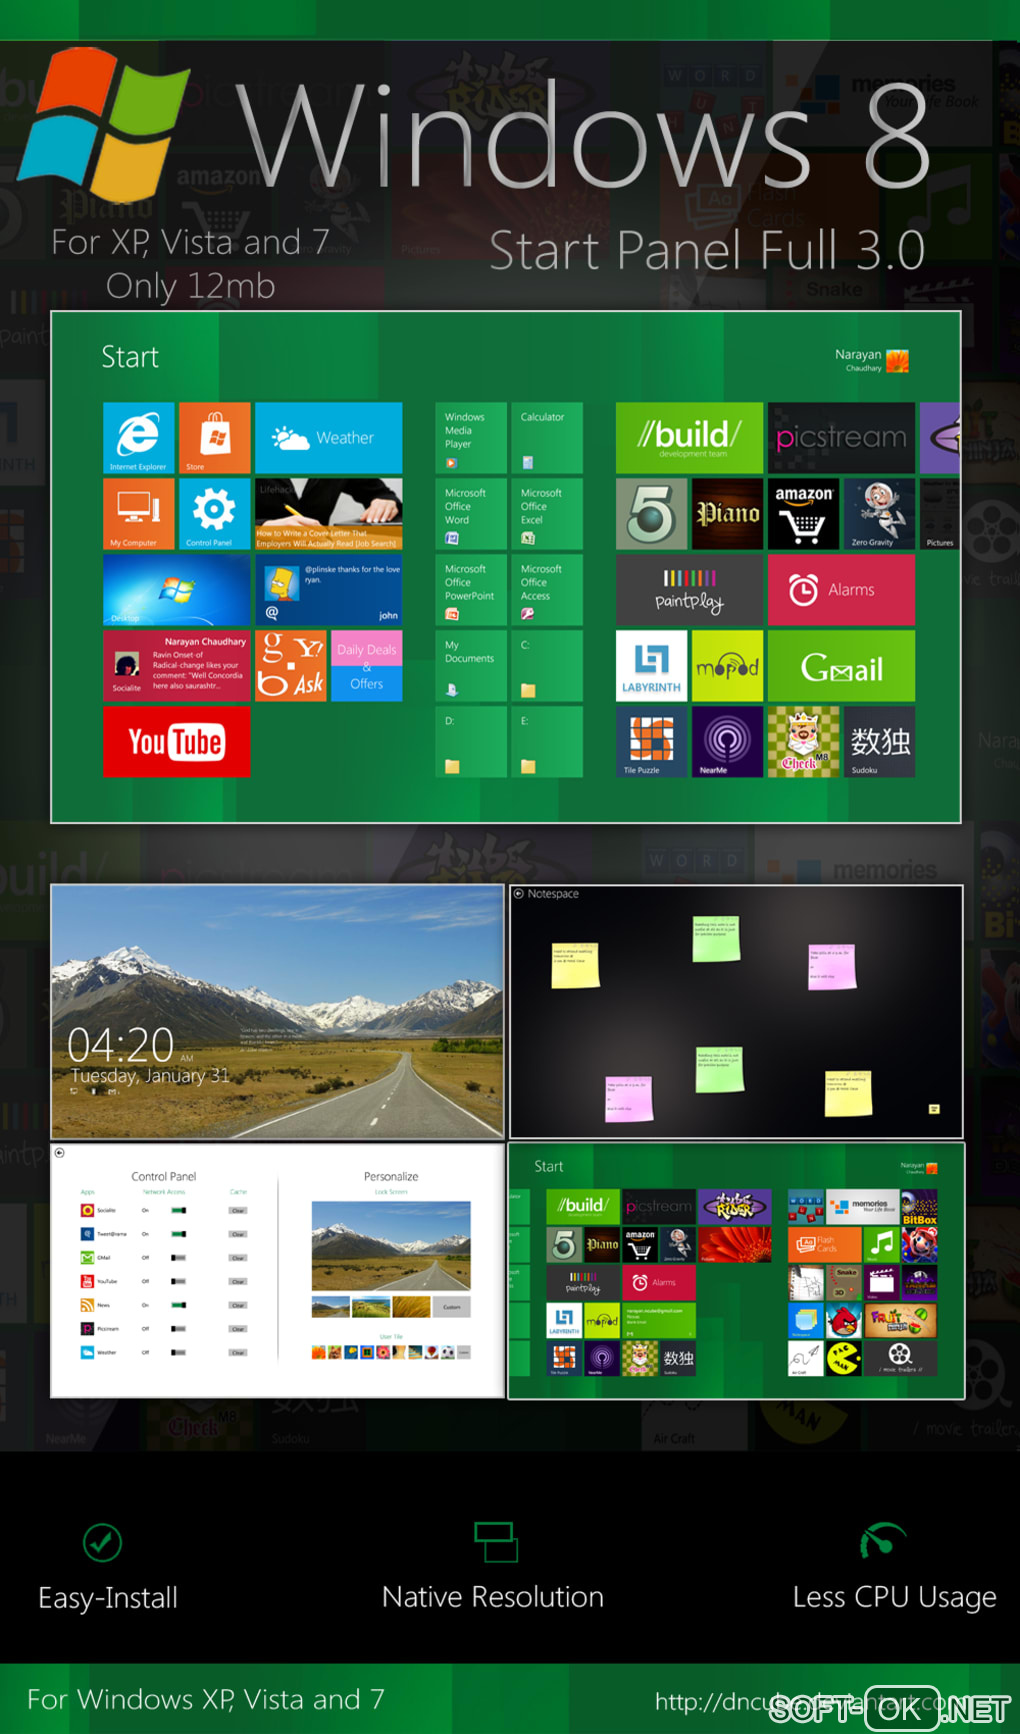 Screenshot №2 "Windows 8 Start Panel"